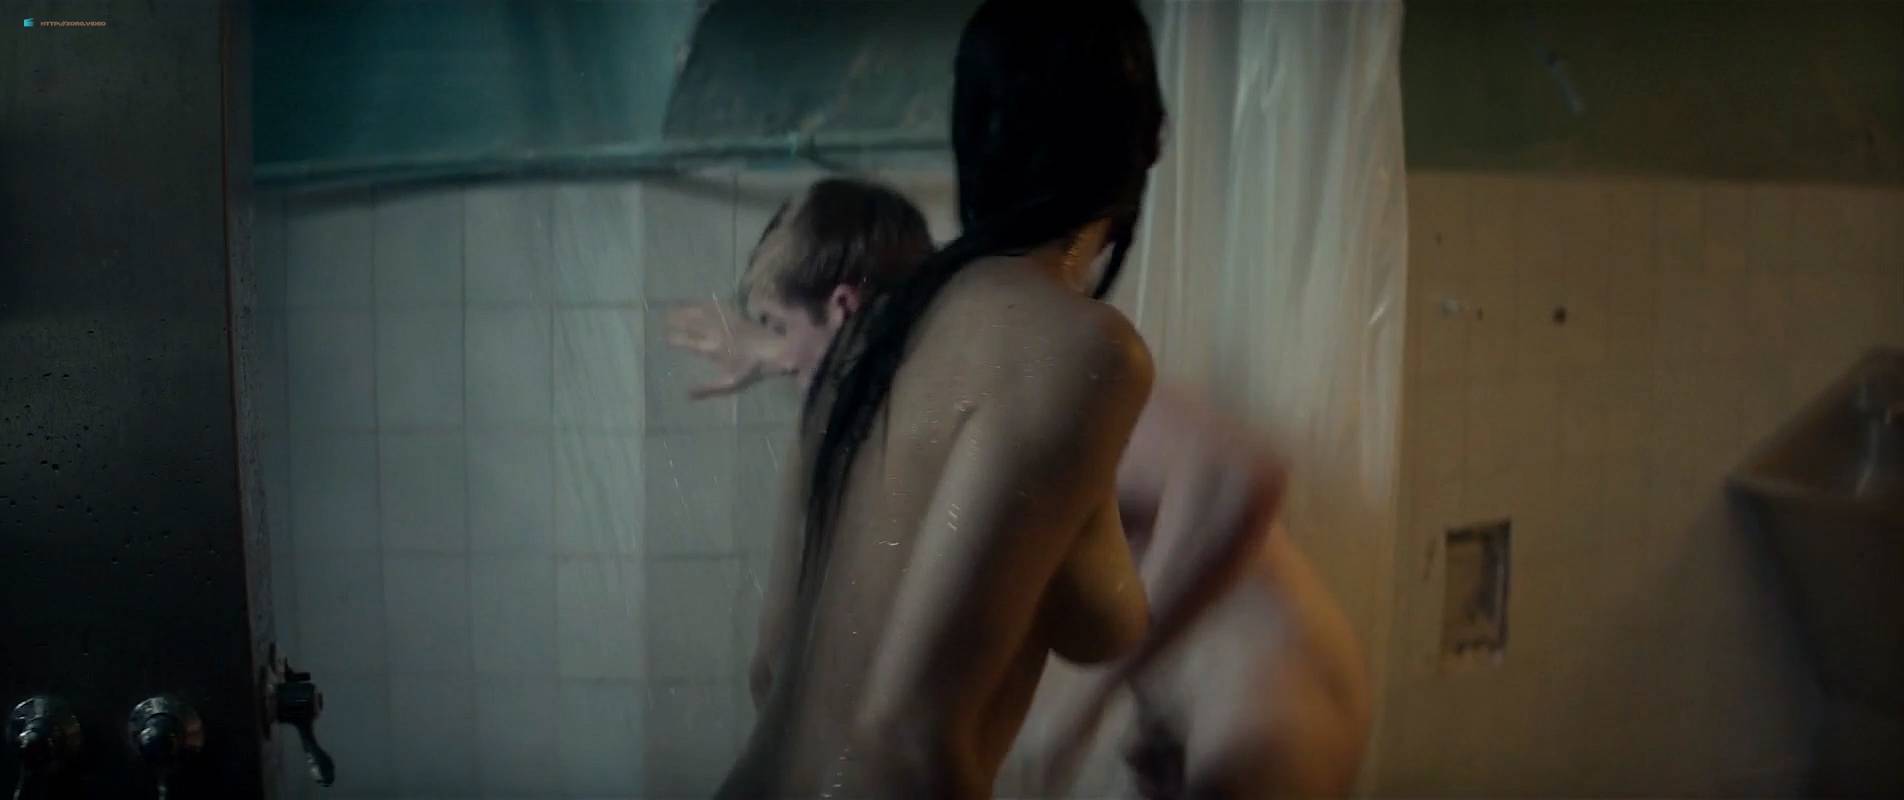 Jennifer lawrence nude movie